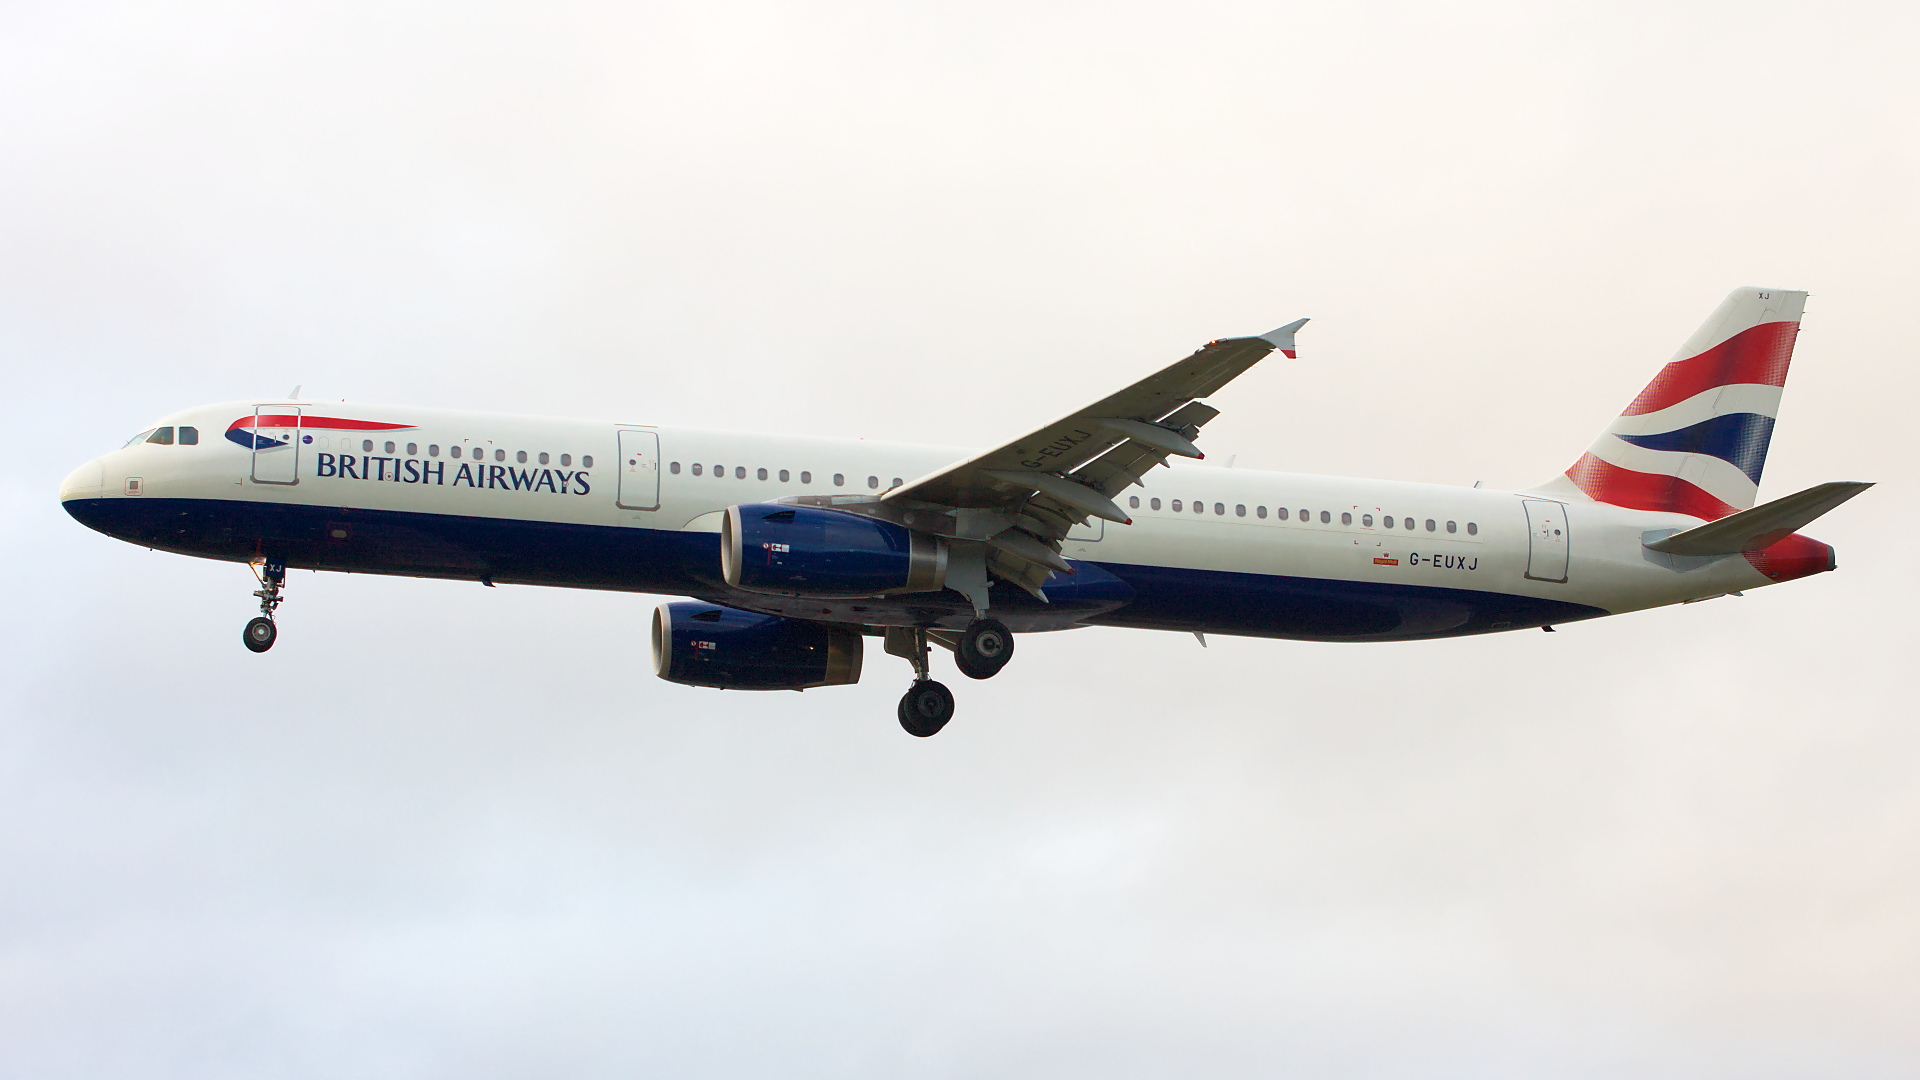 G-EUXJ ✈ British Airways Airbus A321-231 @ London-Heathrow